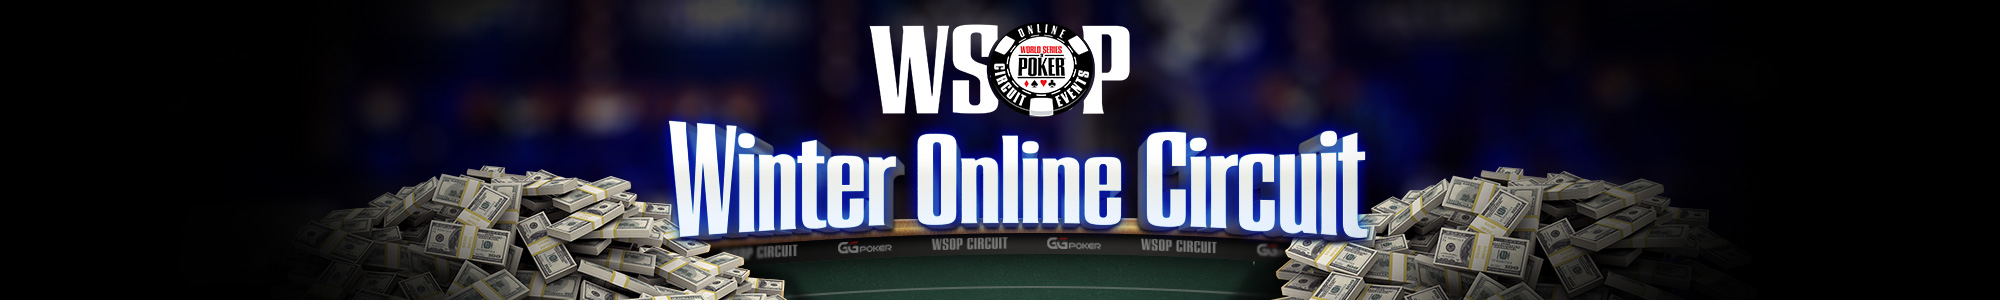 ggpoker poker online wsop winter circuit event